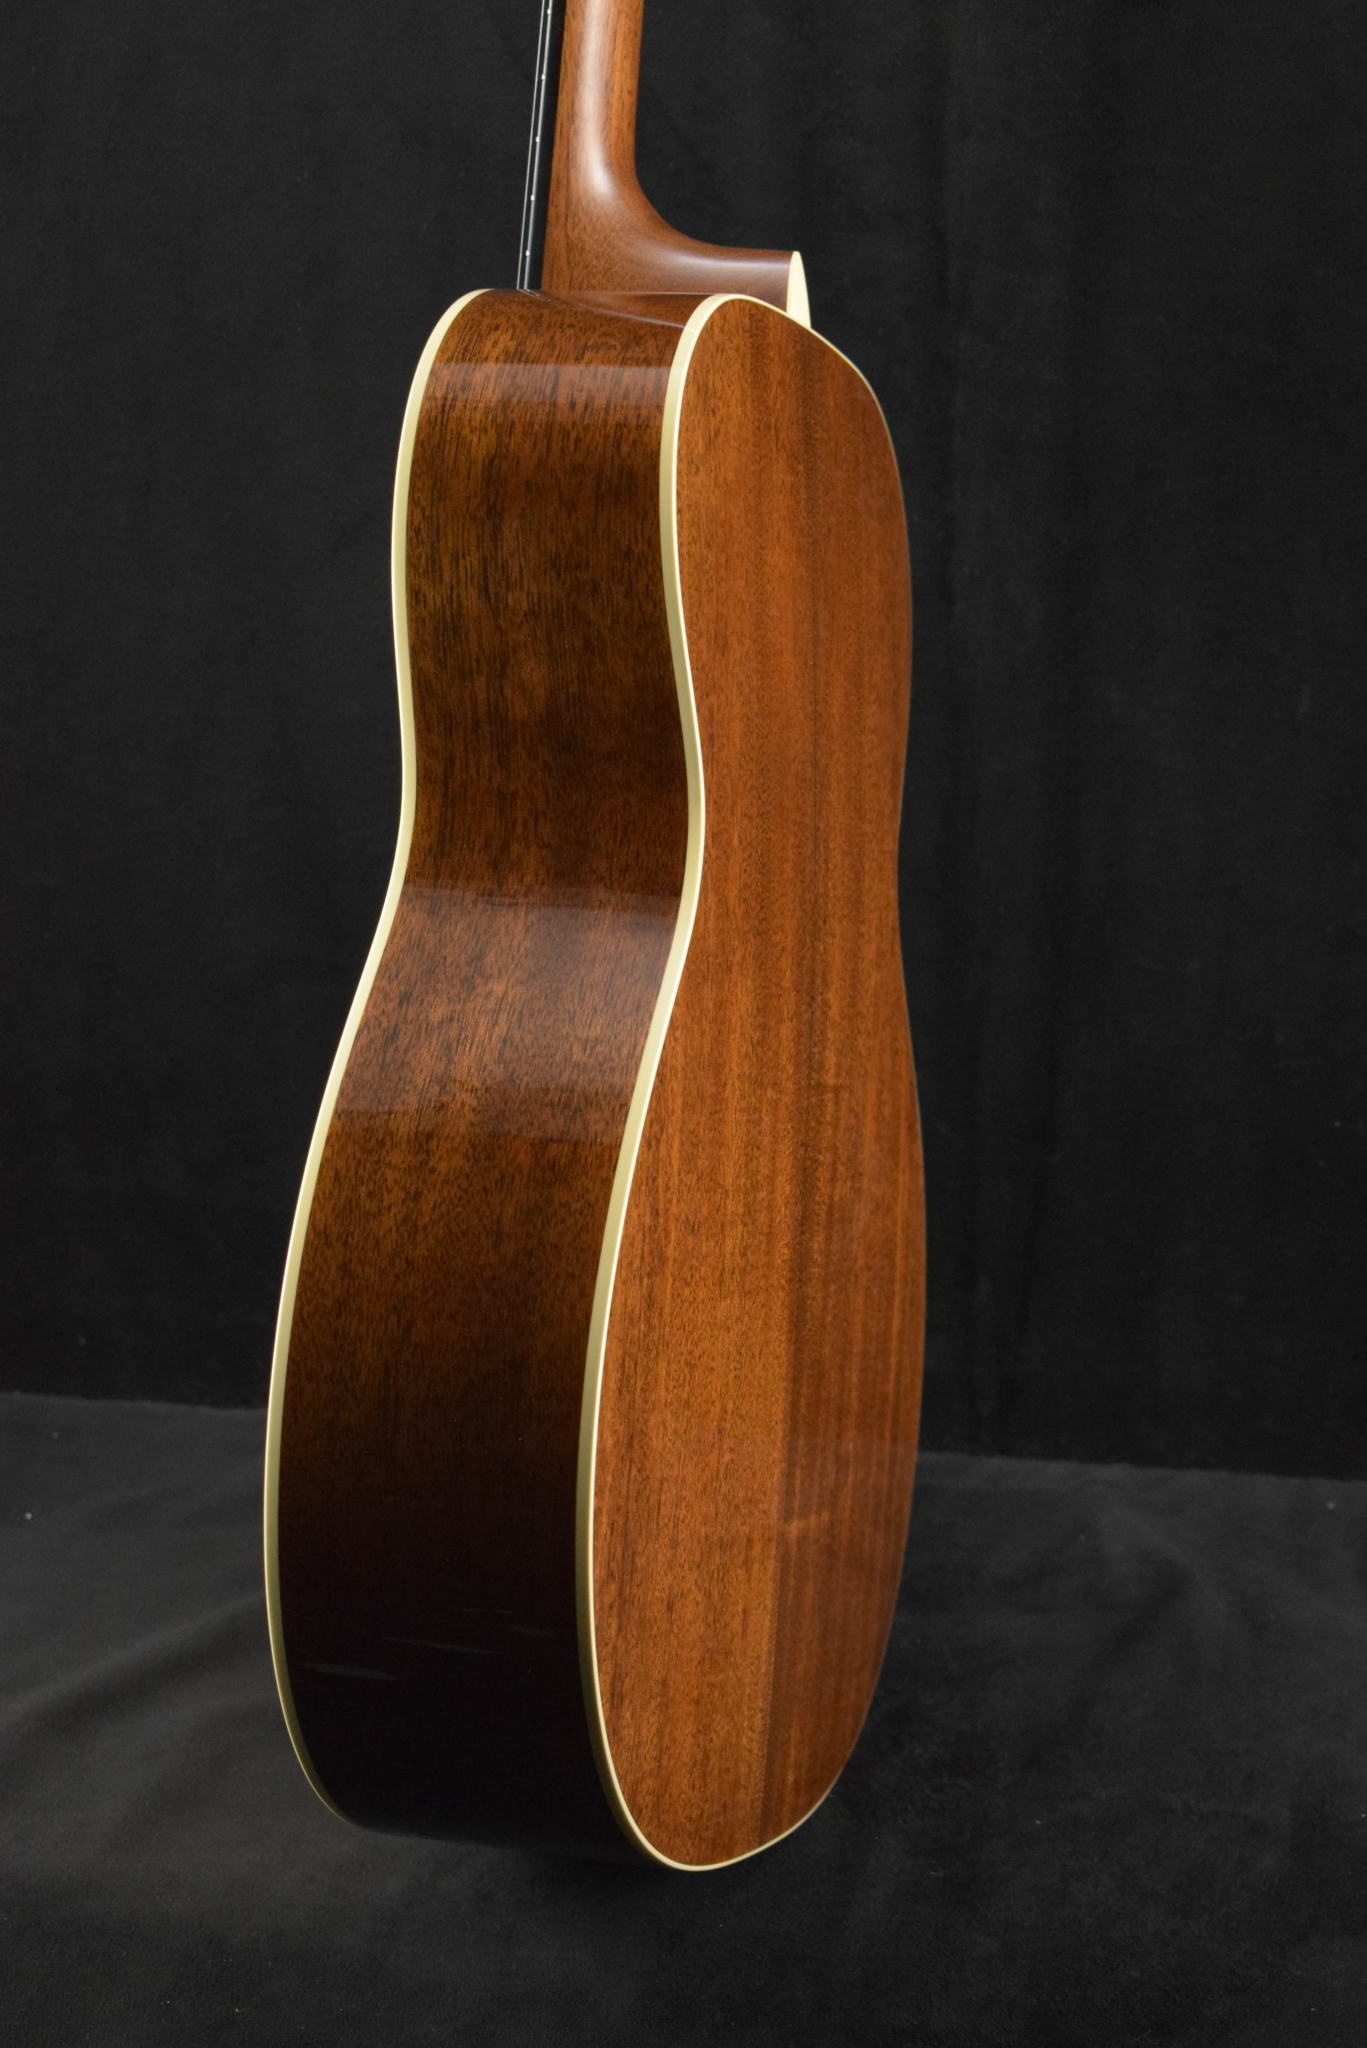 Martin Left Handed 000-15ML Mahogany Acoustic Guitar - Adirondack Guitar